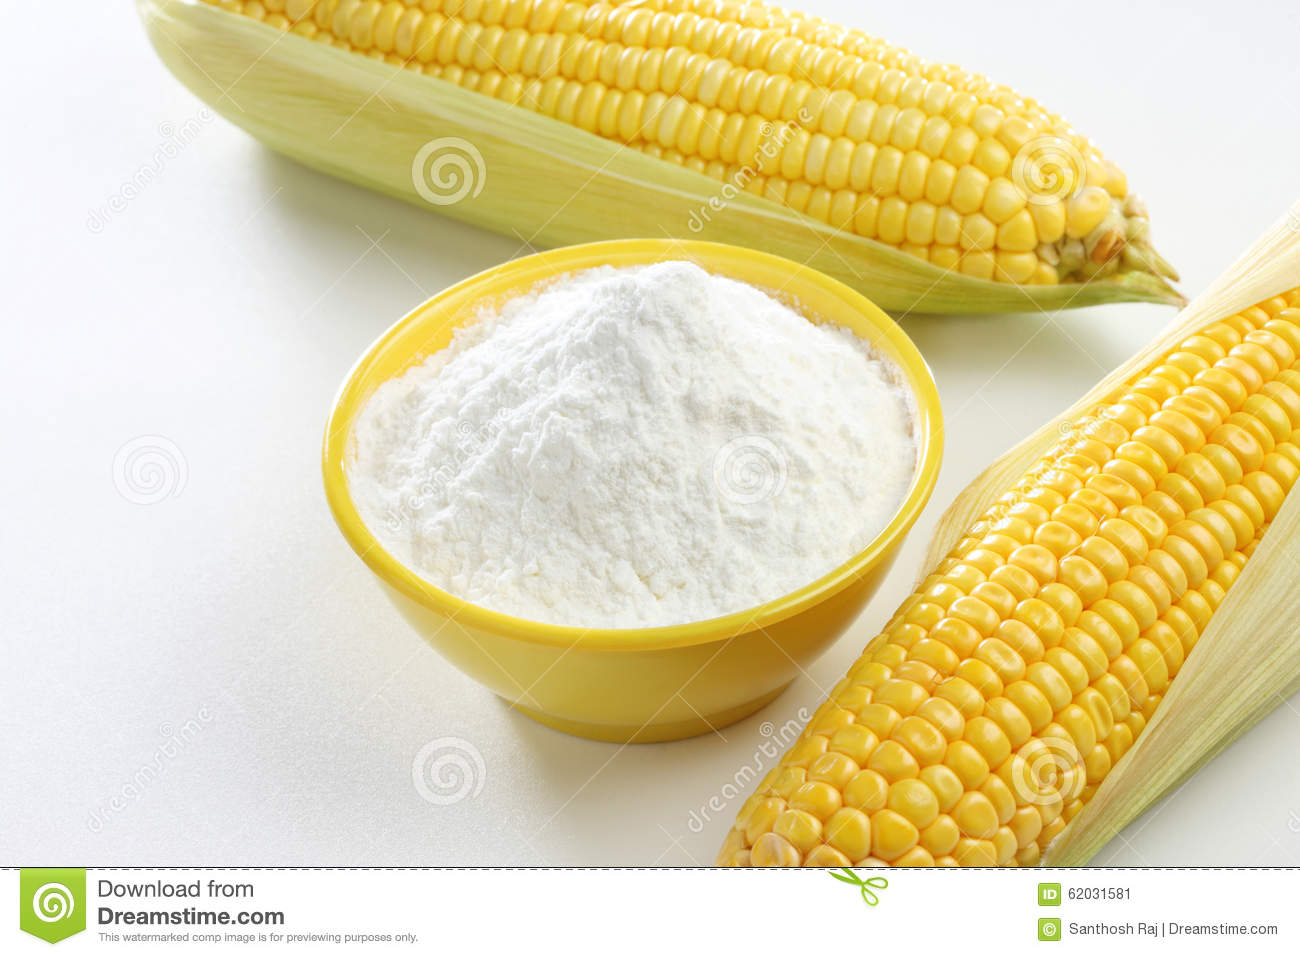 Corn Flour white 1 kg (Cornstarch)